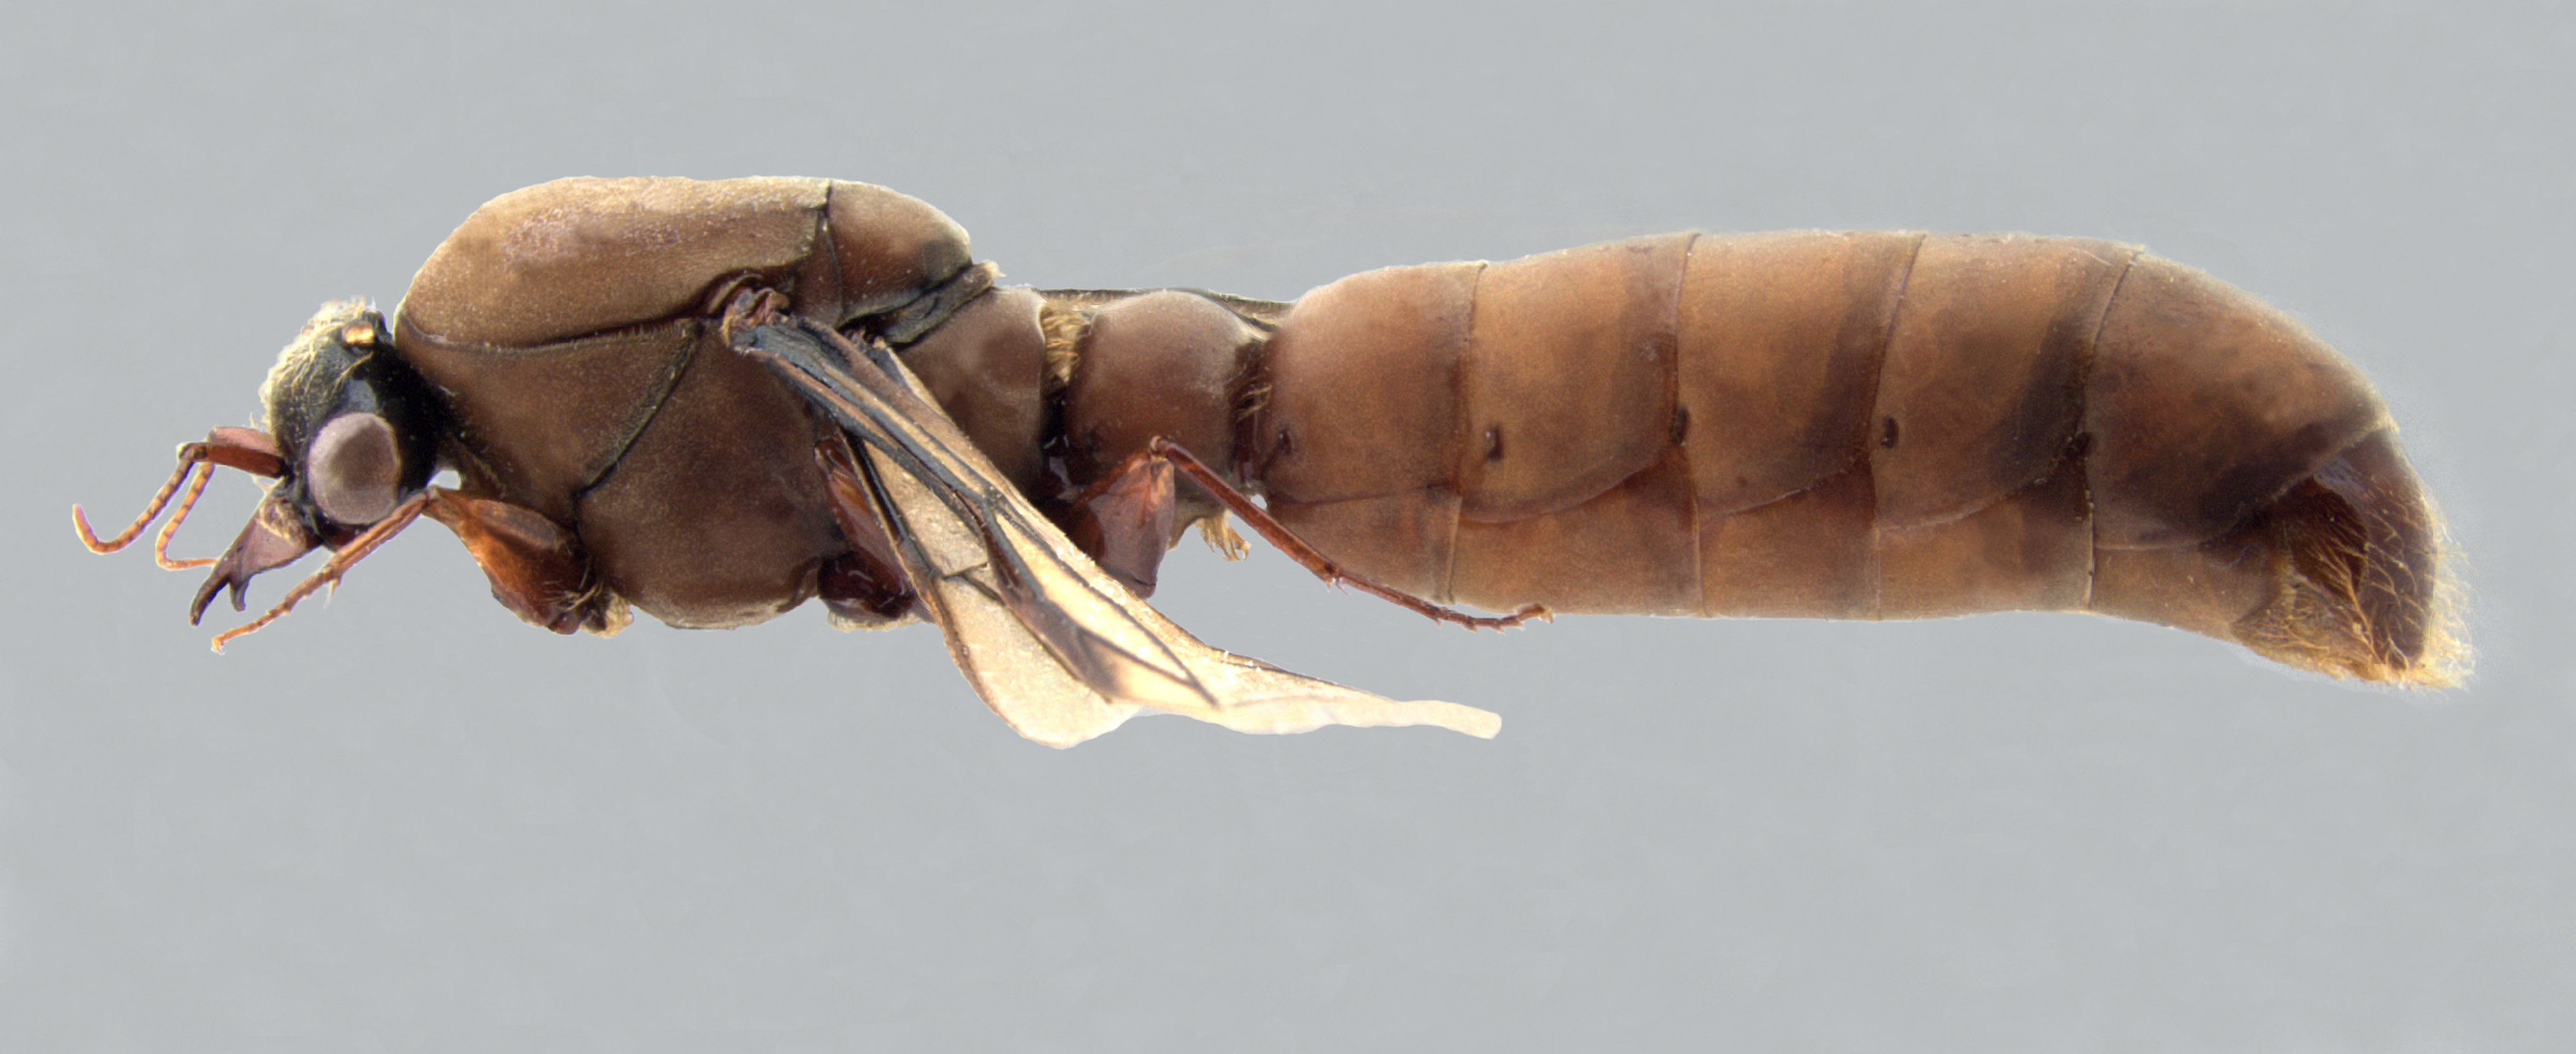  Camponotus ligniperda lateral